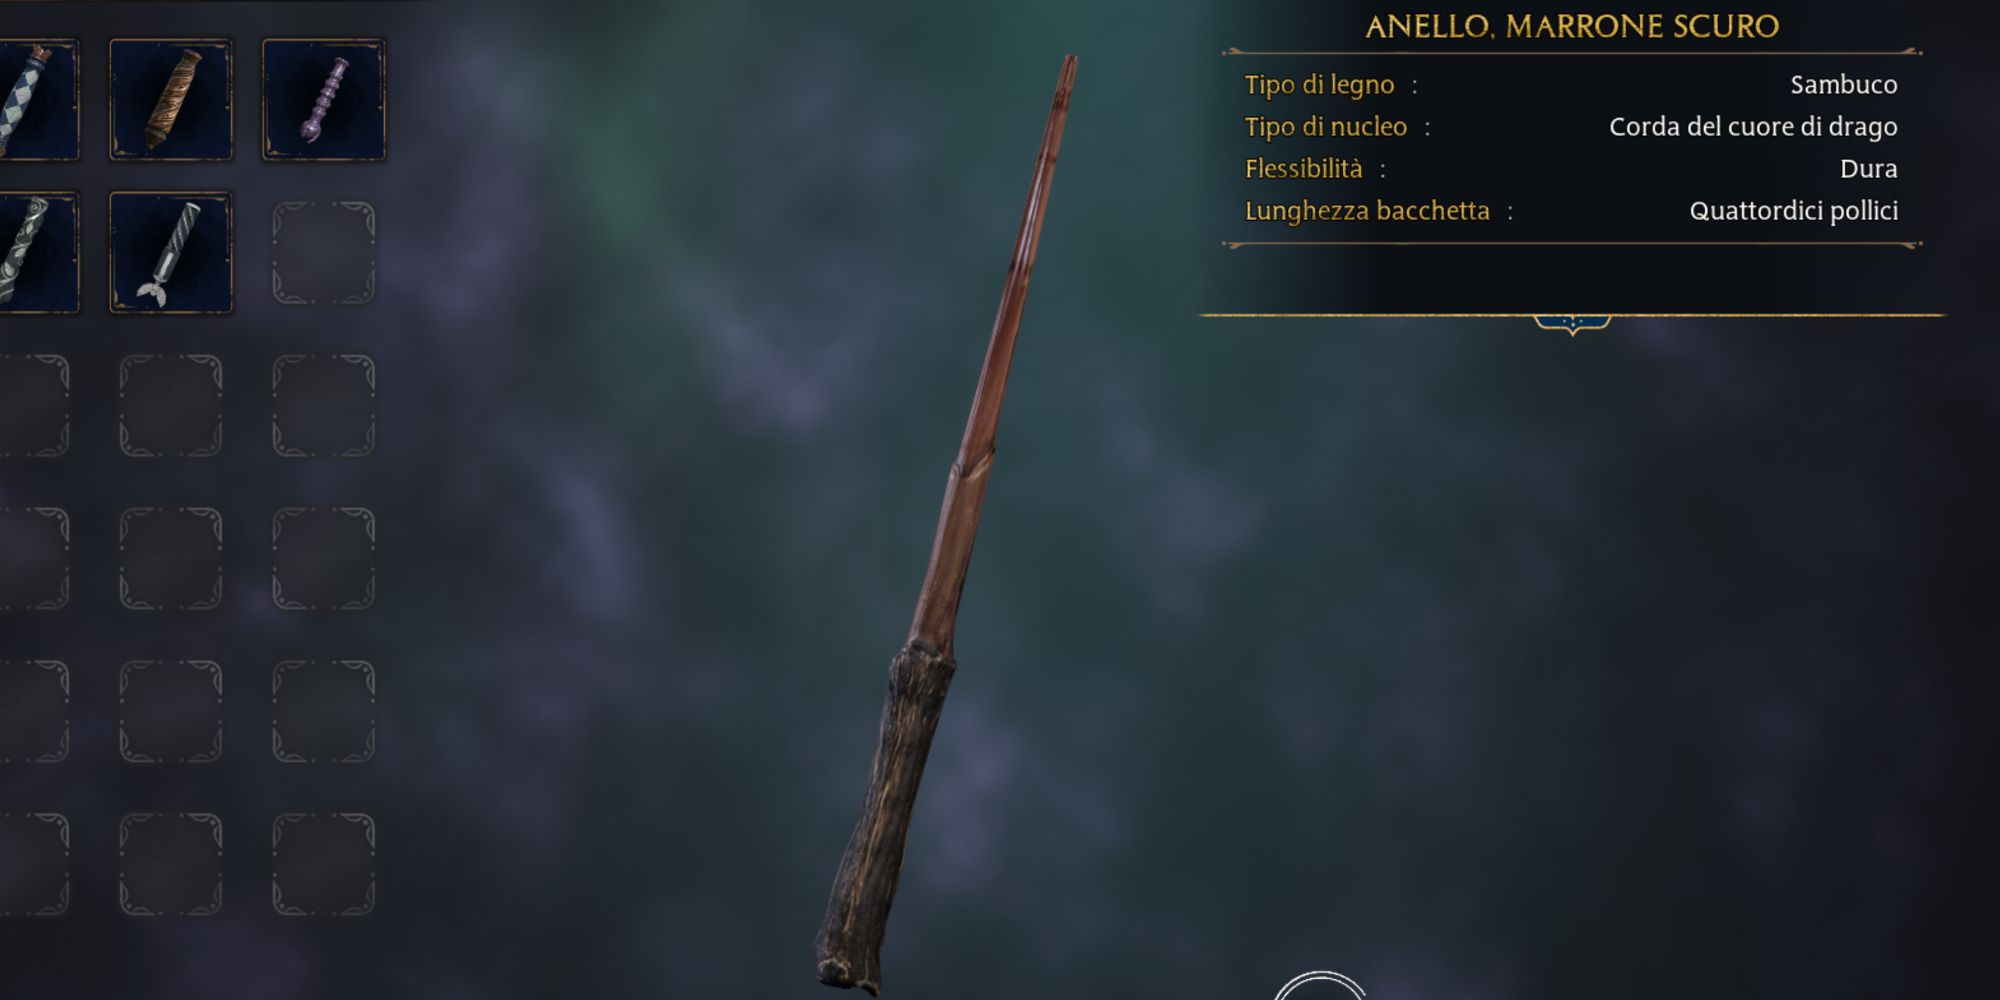 Harry Potter's wand